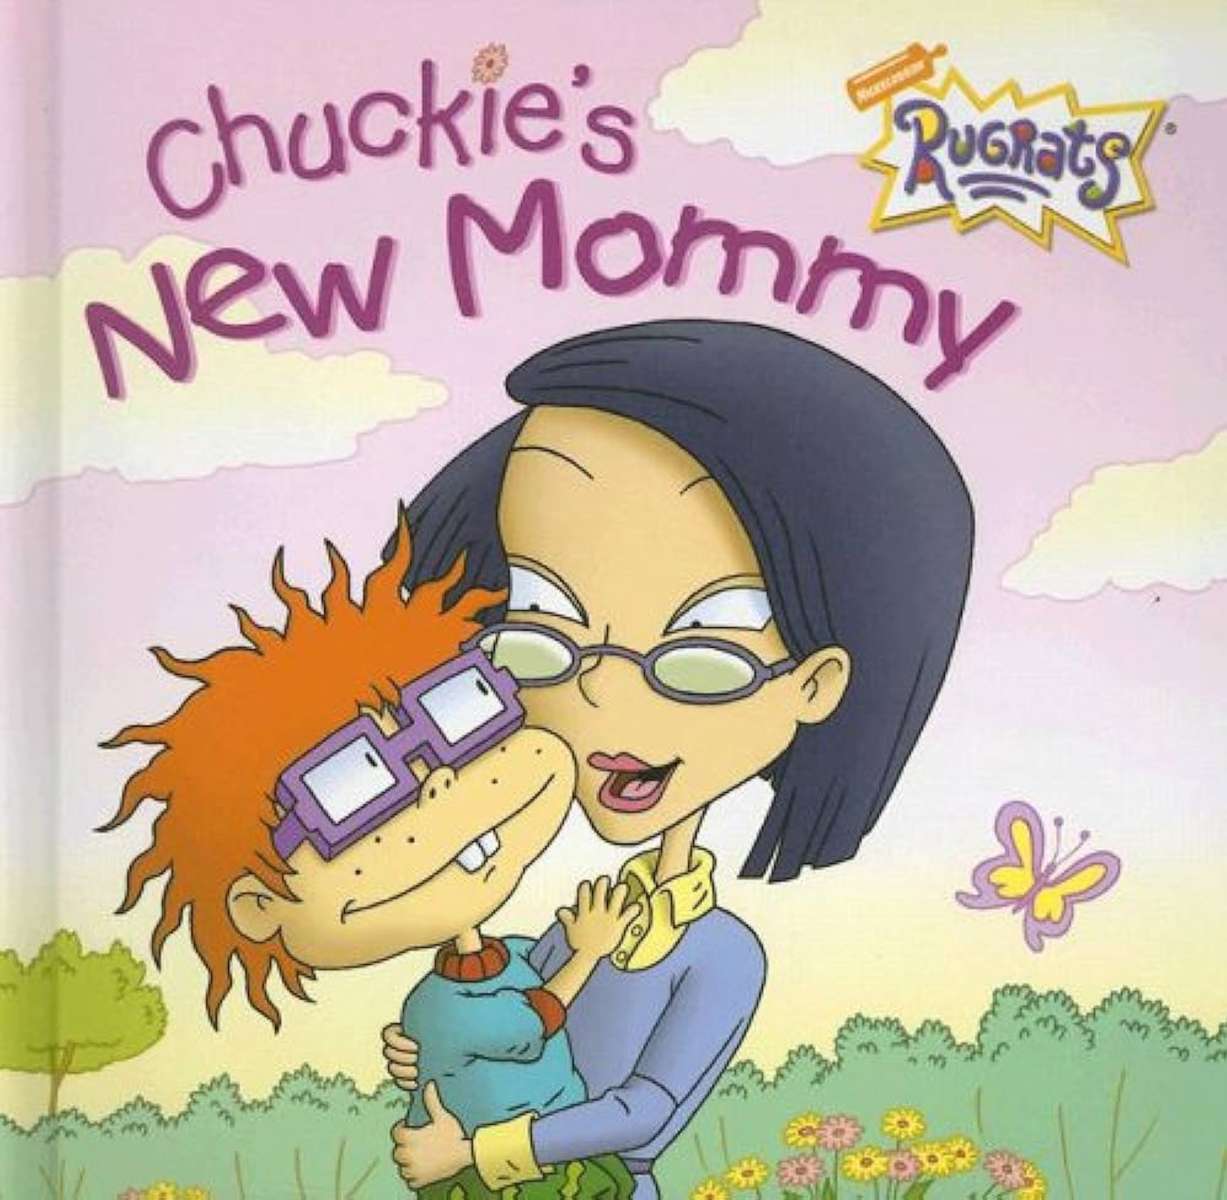 Chuckieho nová máma (Rugrats) skládačky online